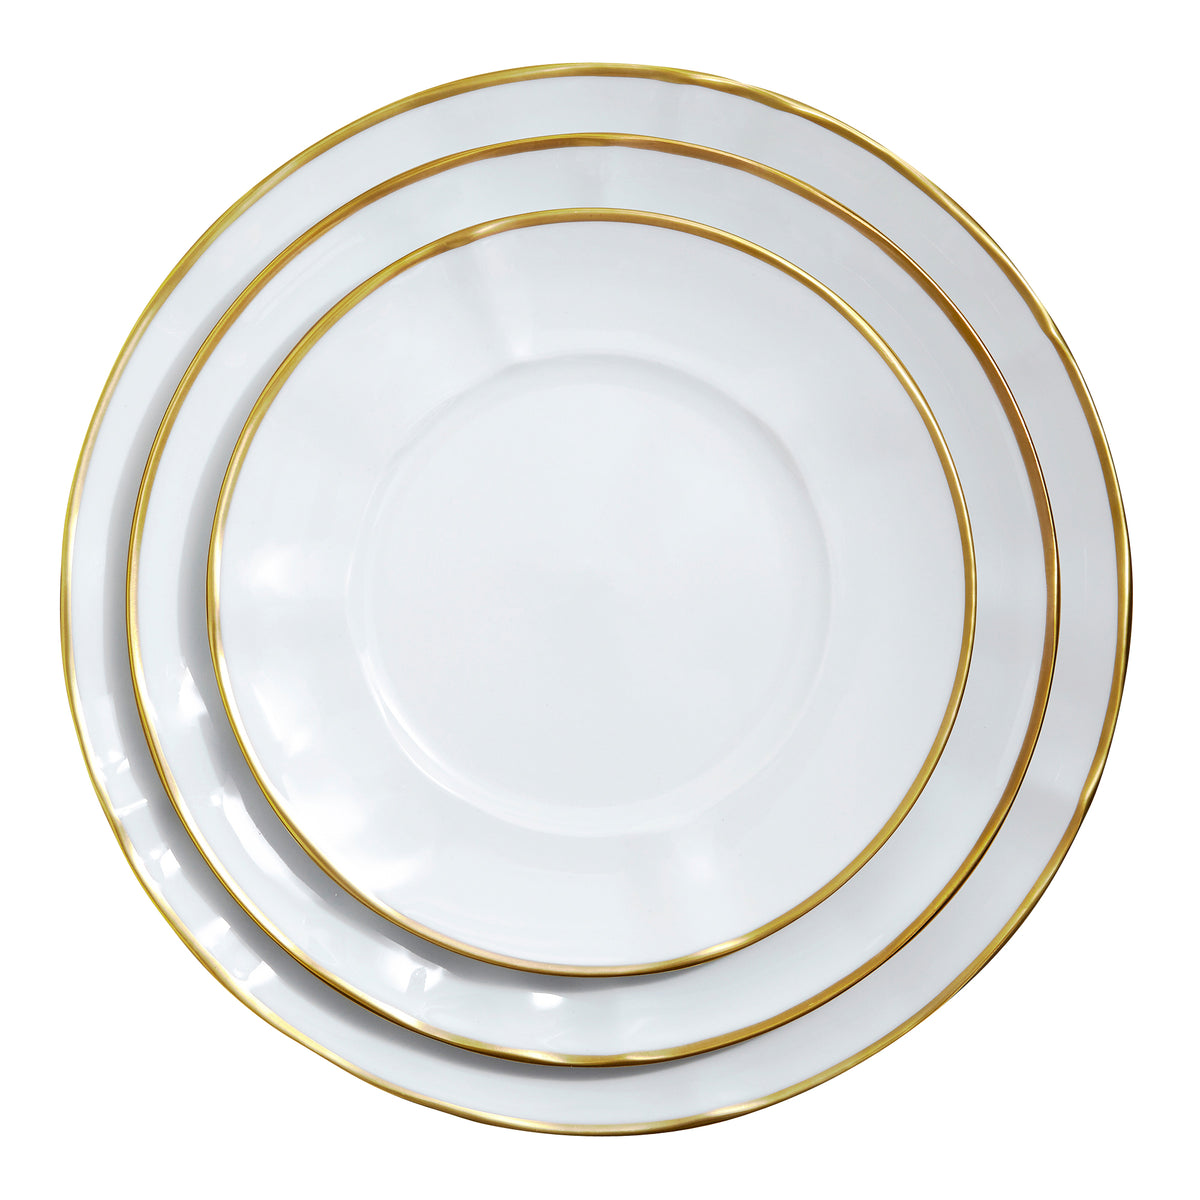 Simply Elegant Gold Dinner Plate